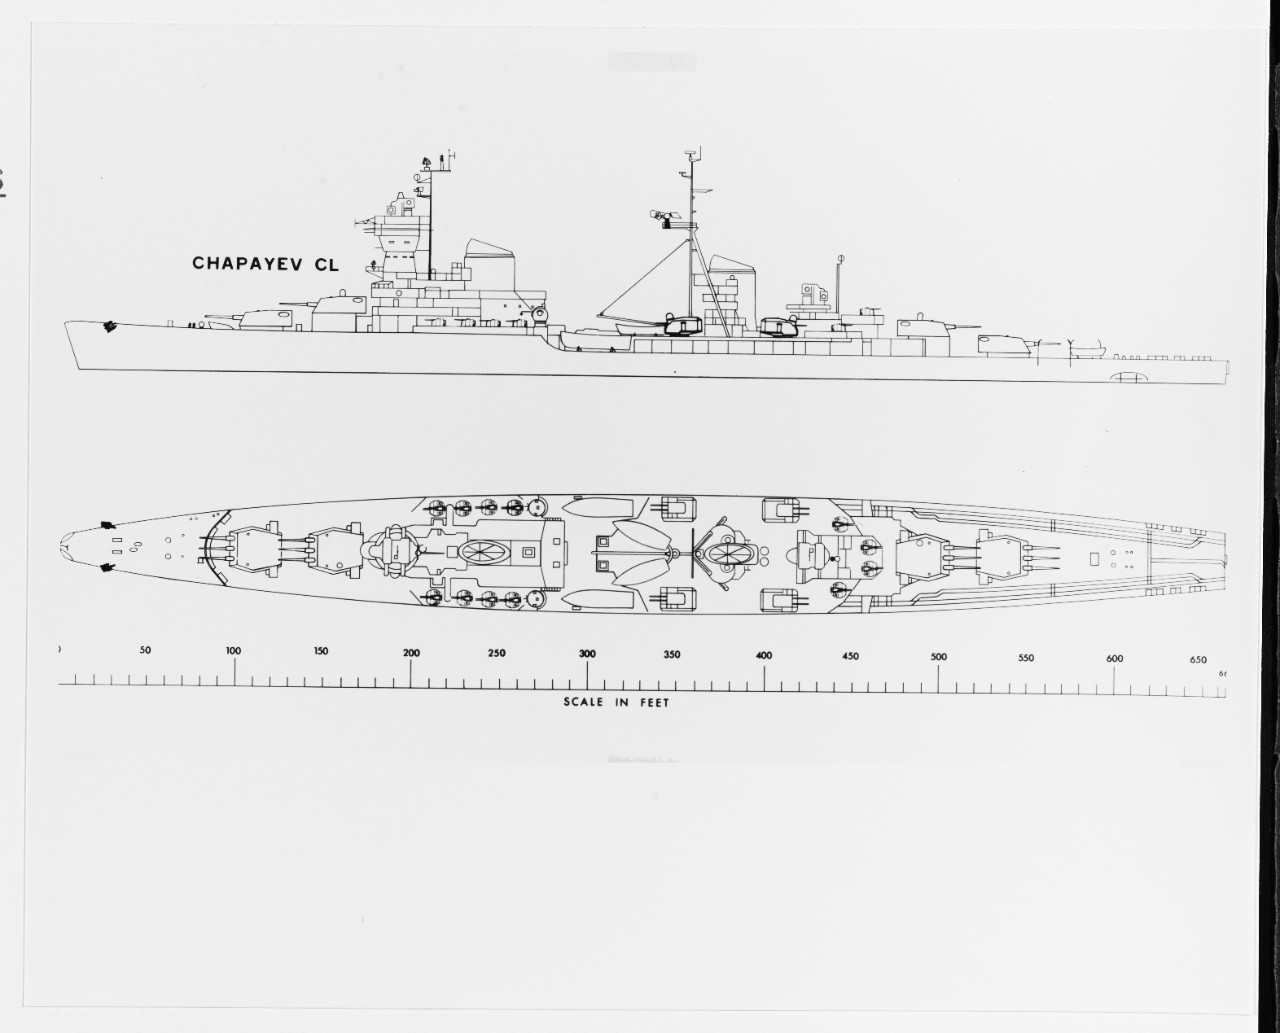 Soviet CHAPAYEV class light cruiser, circa 1960 appearance drawing.